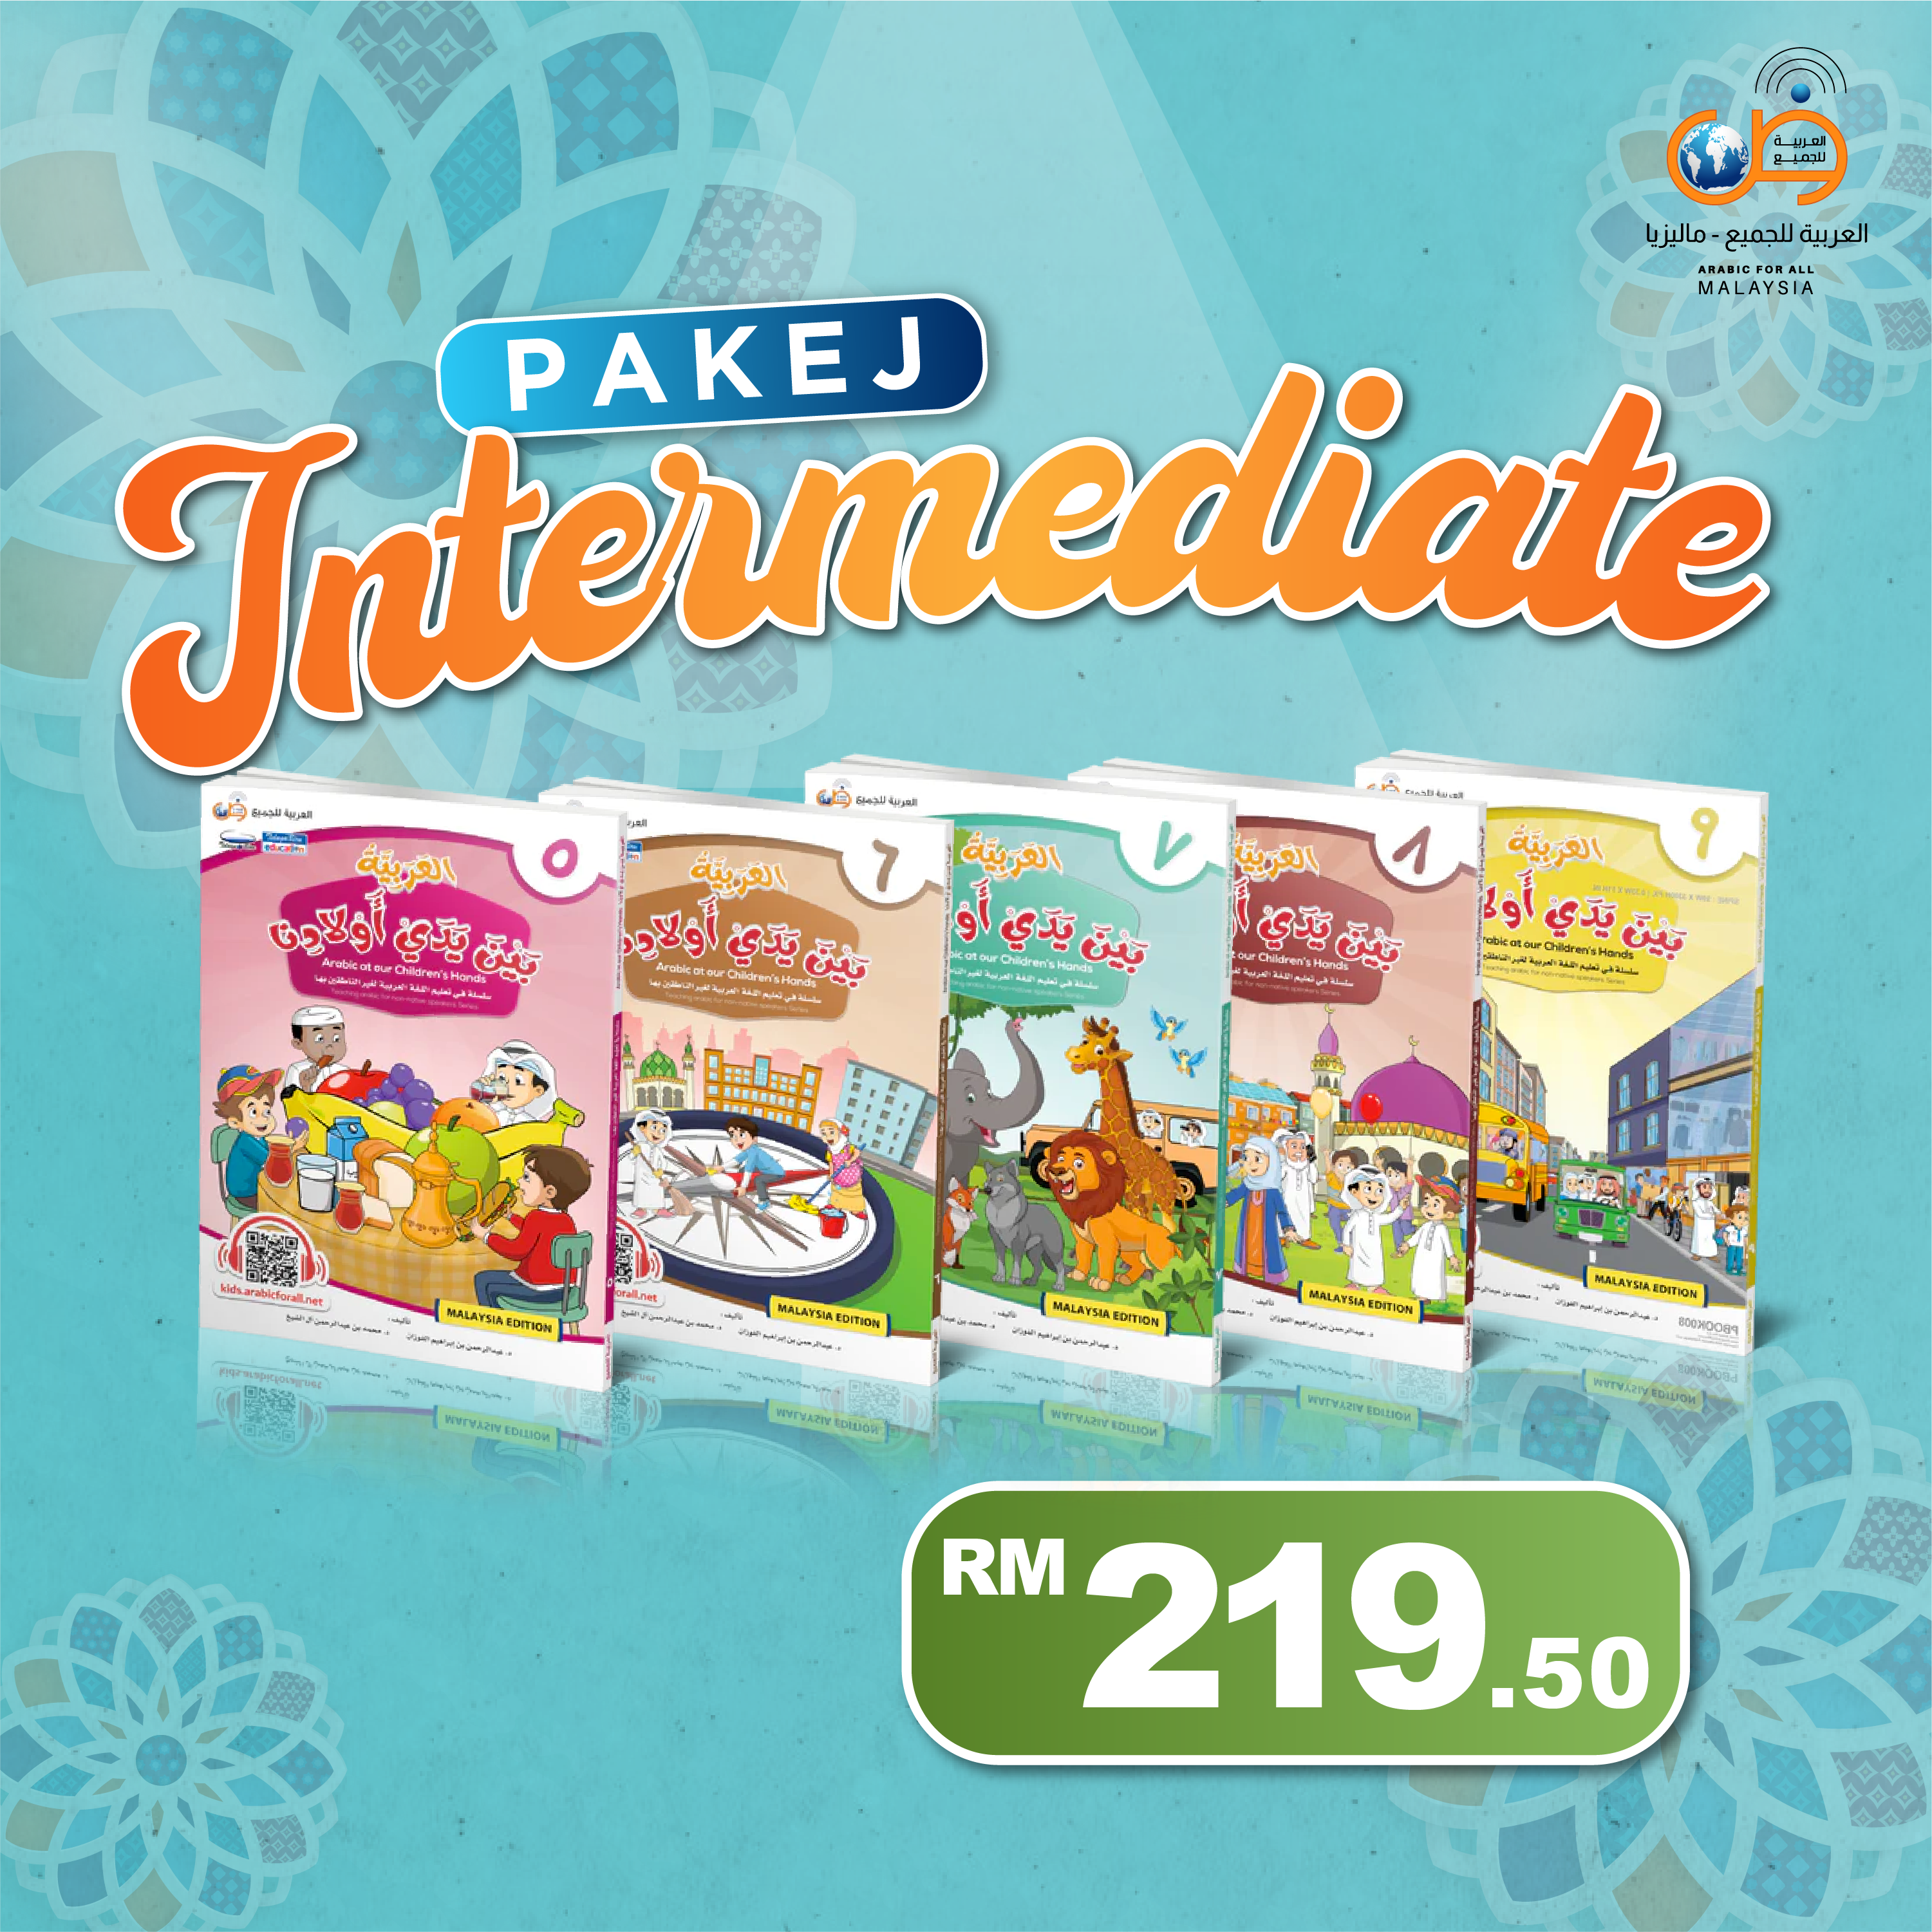 Pakej Intermediate : Arabic For All Malaysia